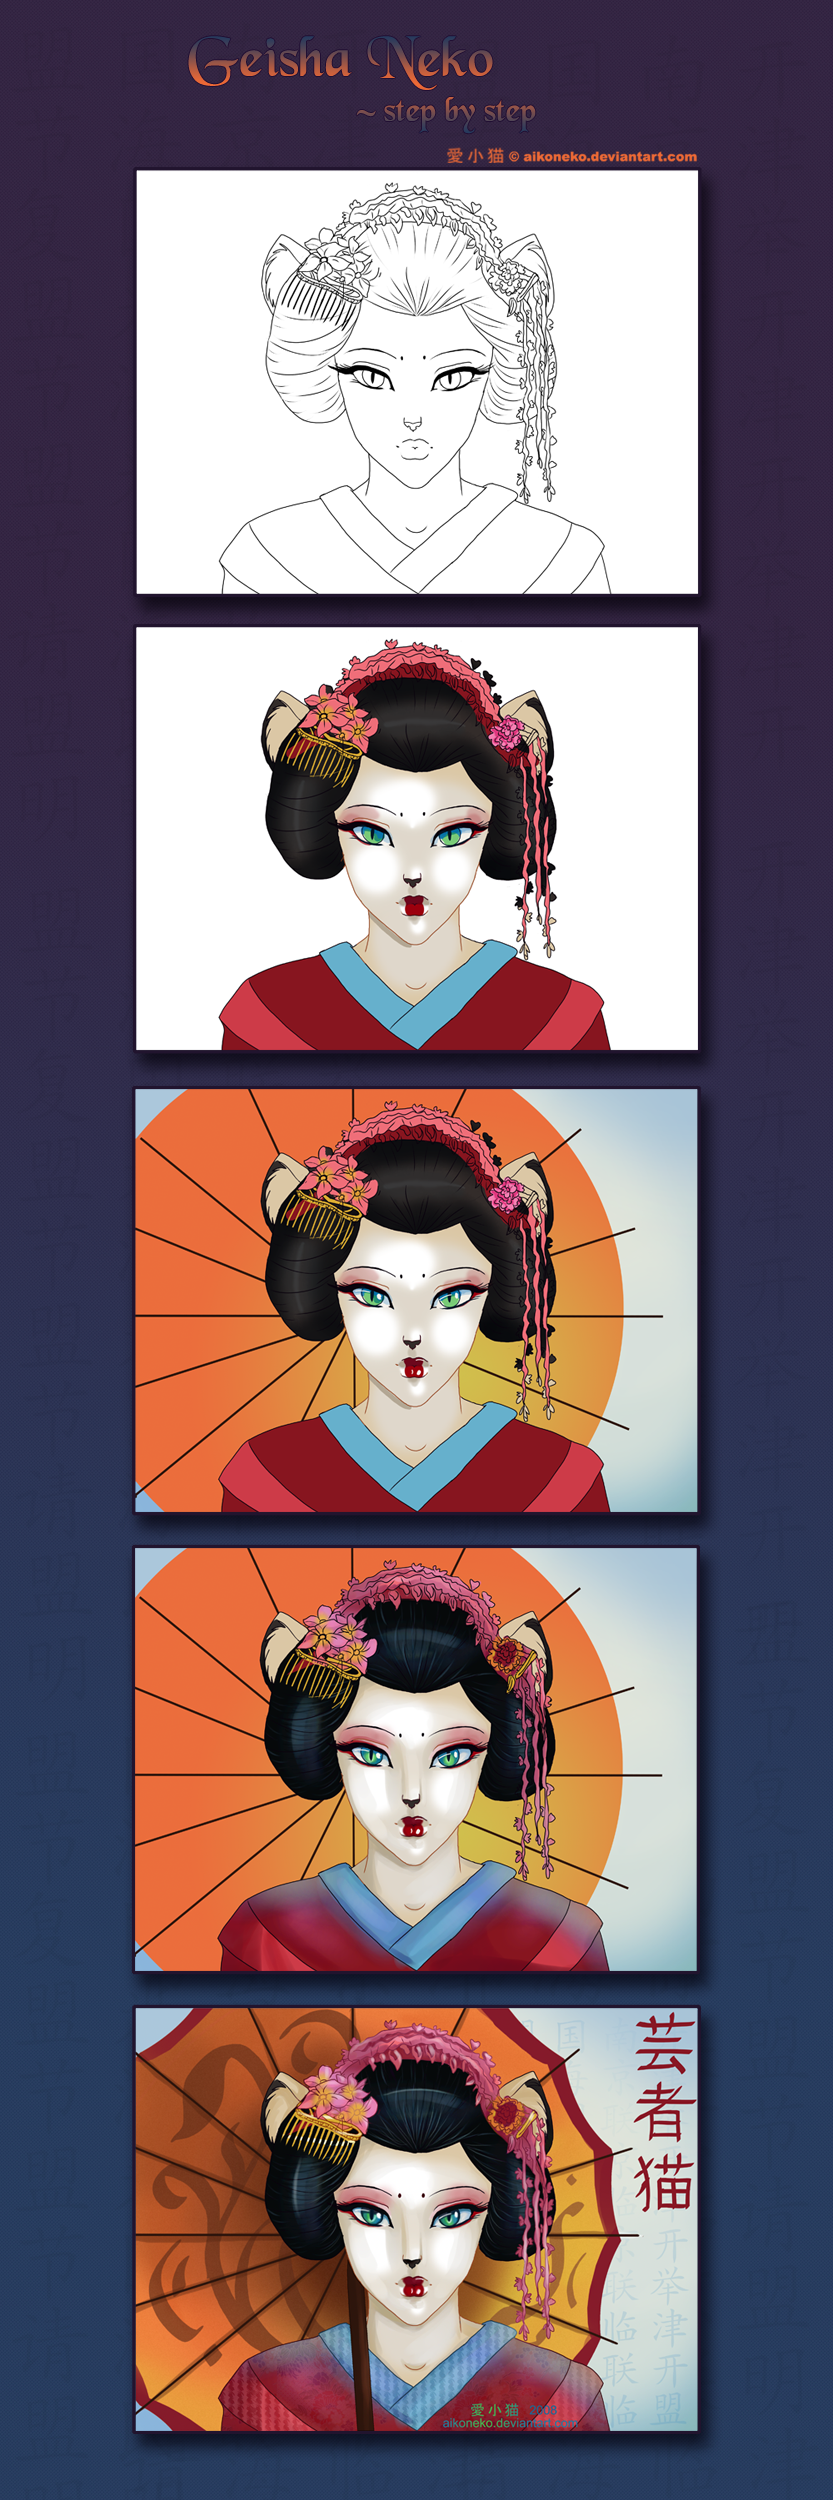 Geisha-Step by Step